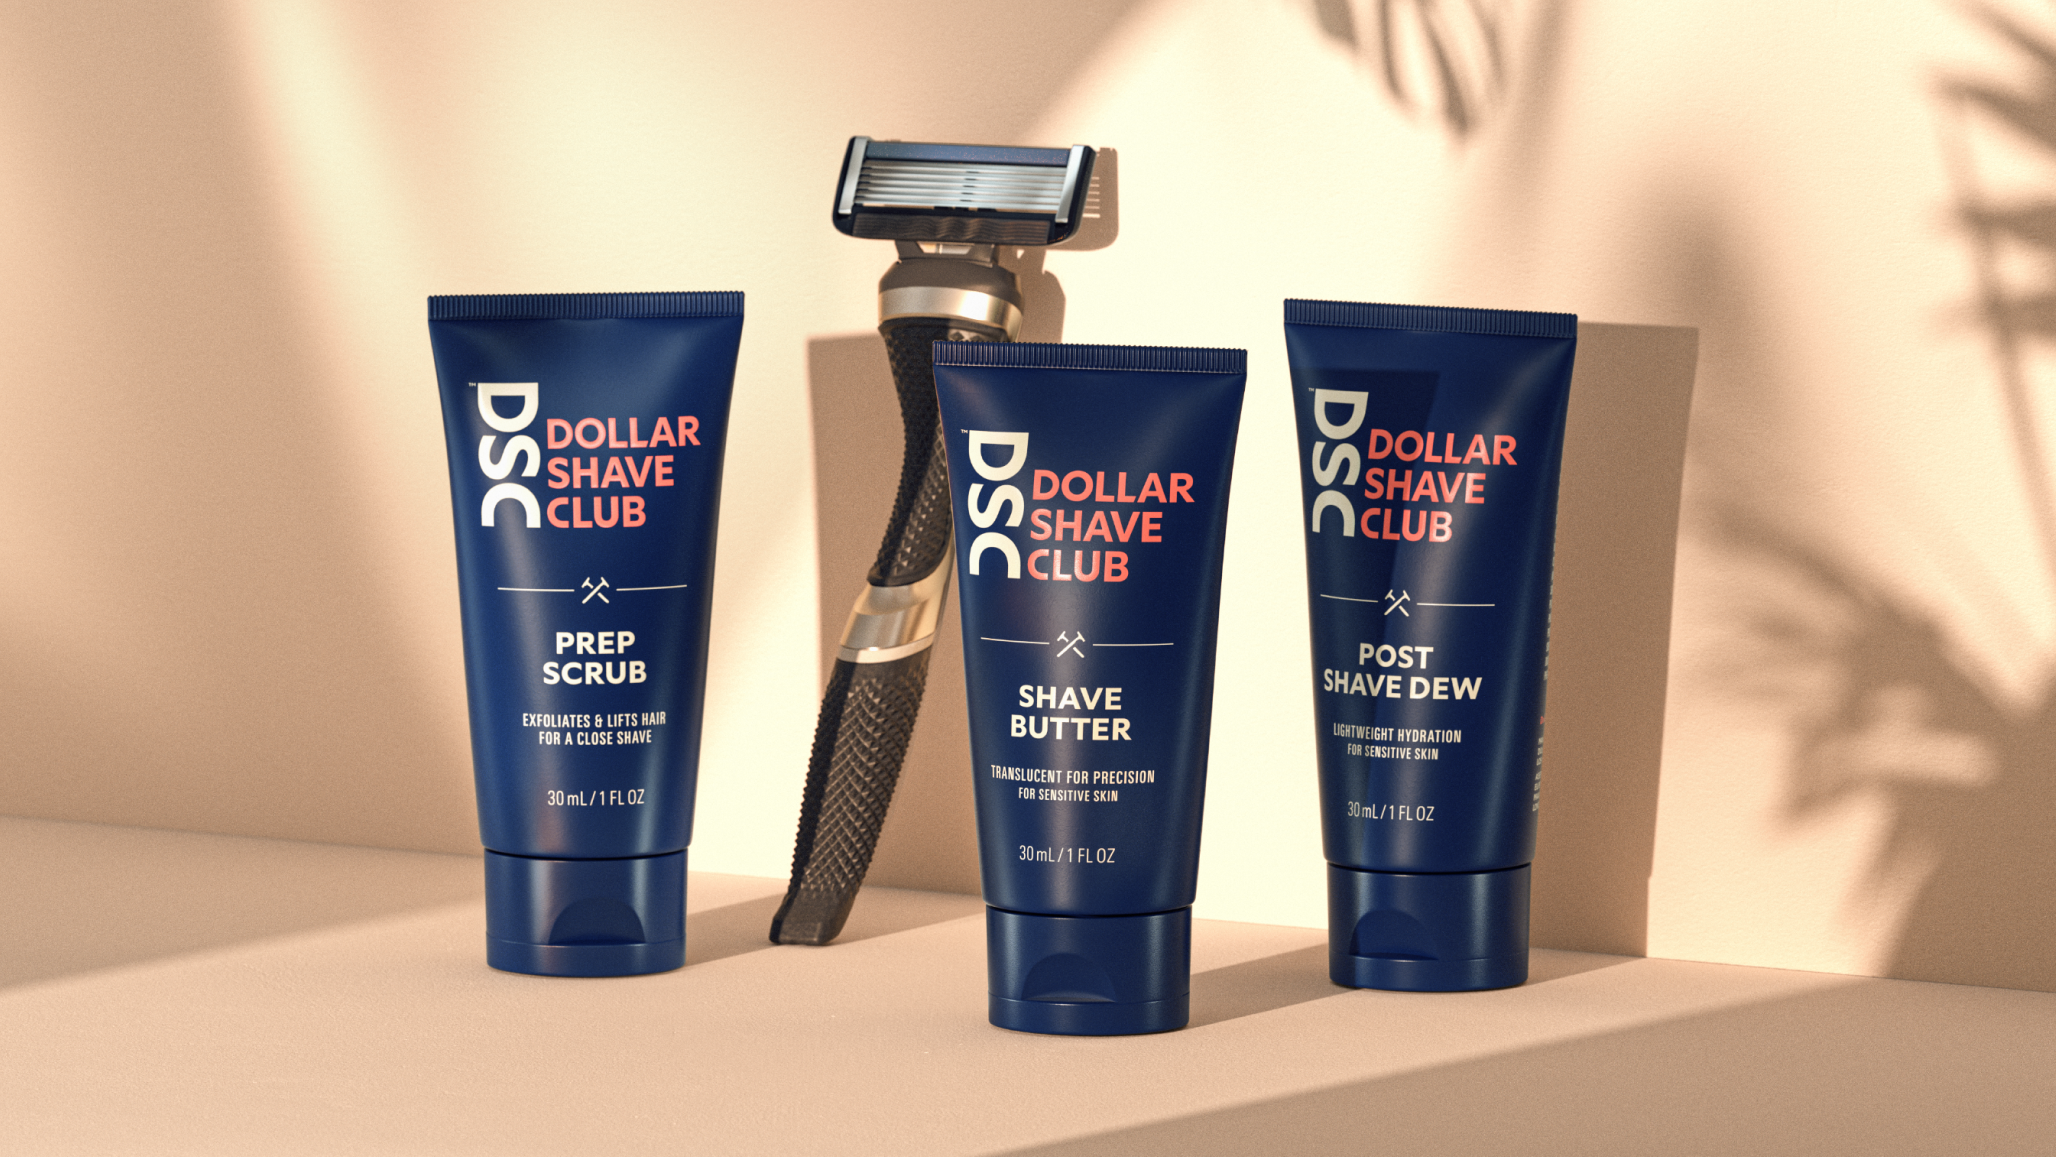 Dollar Shave Club brand image